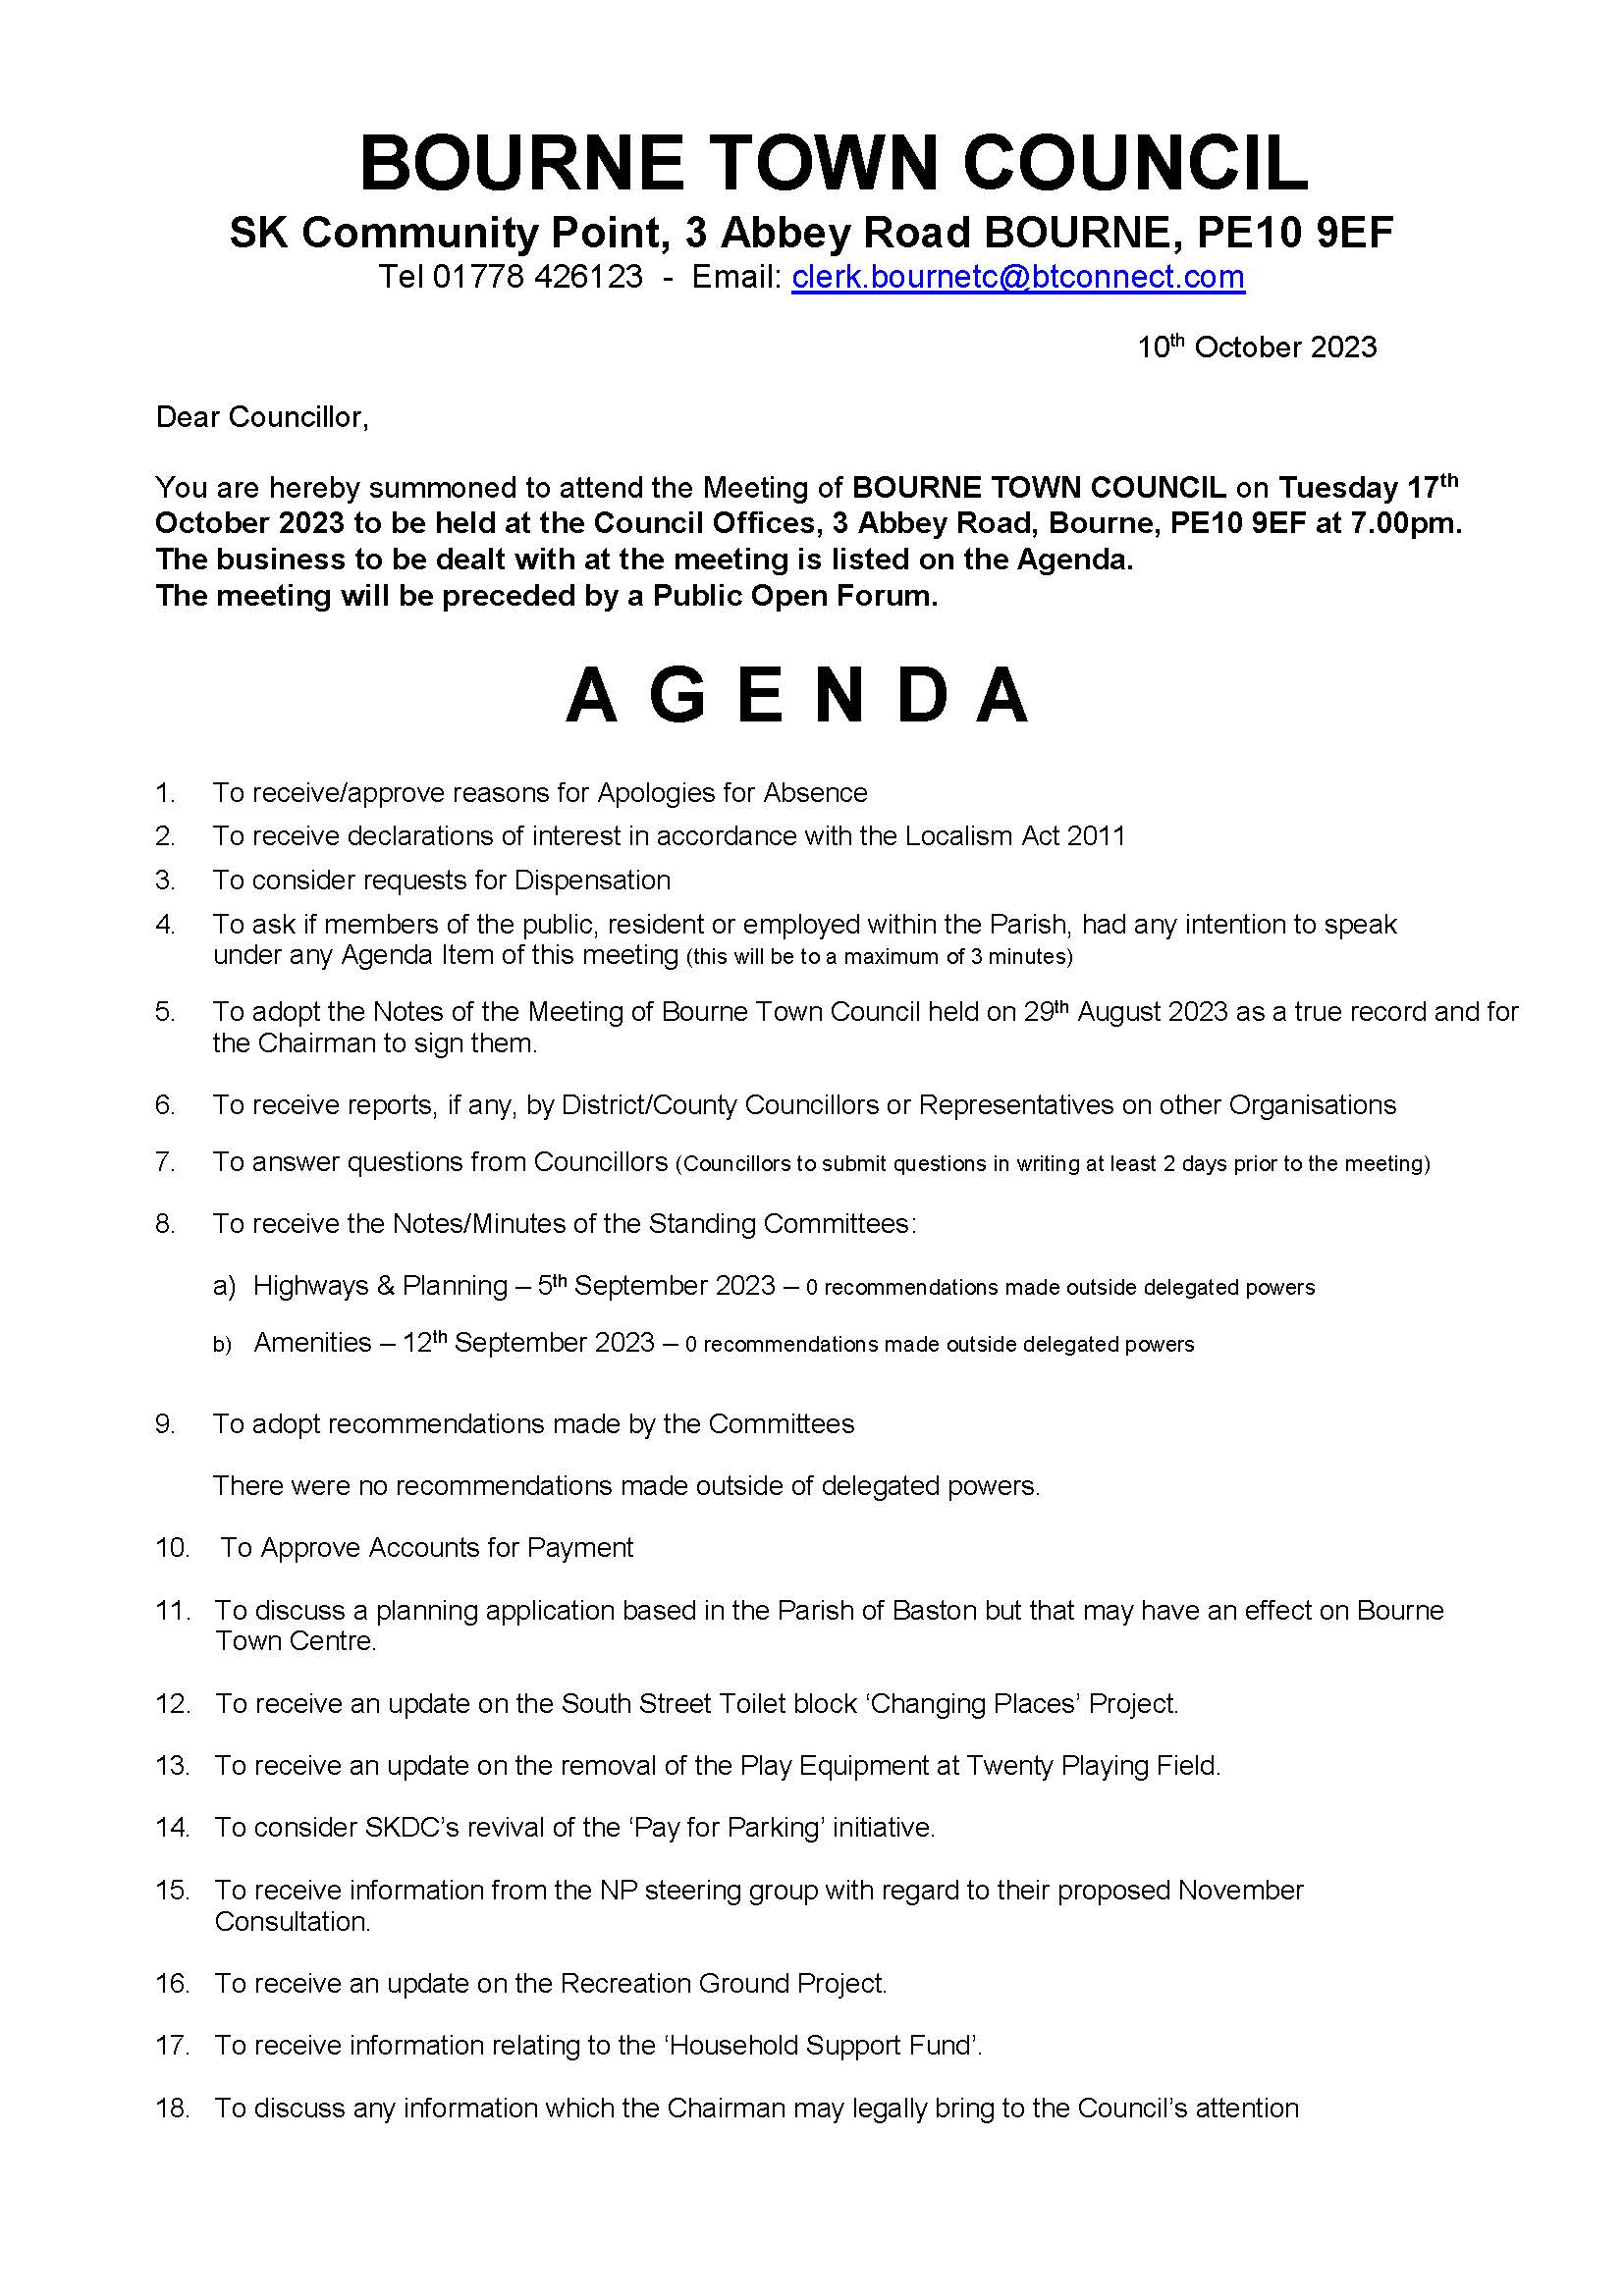 Agenda for Full Council & Open Forum 17 October 2023